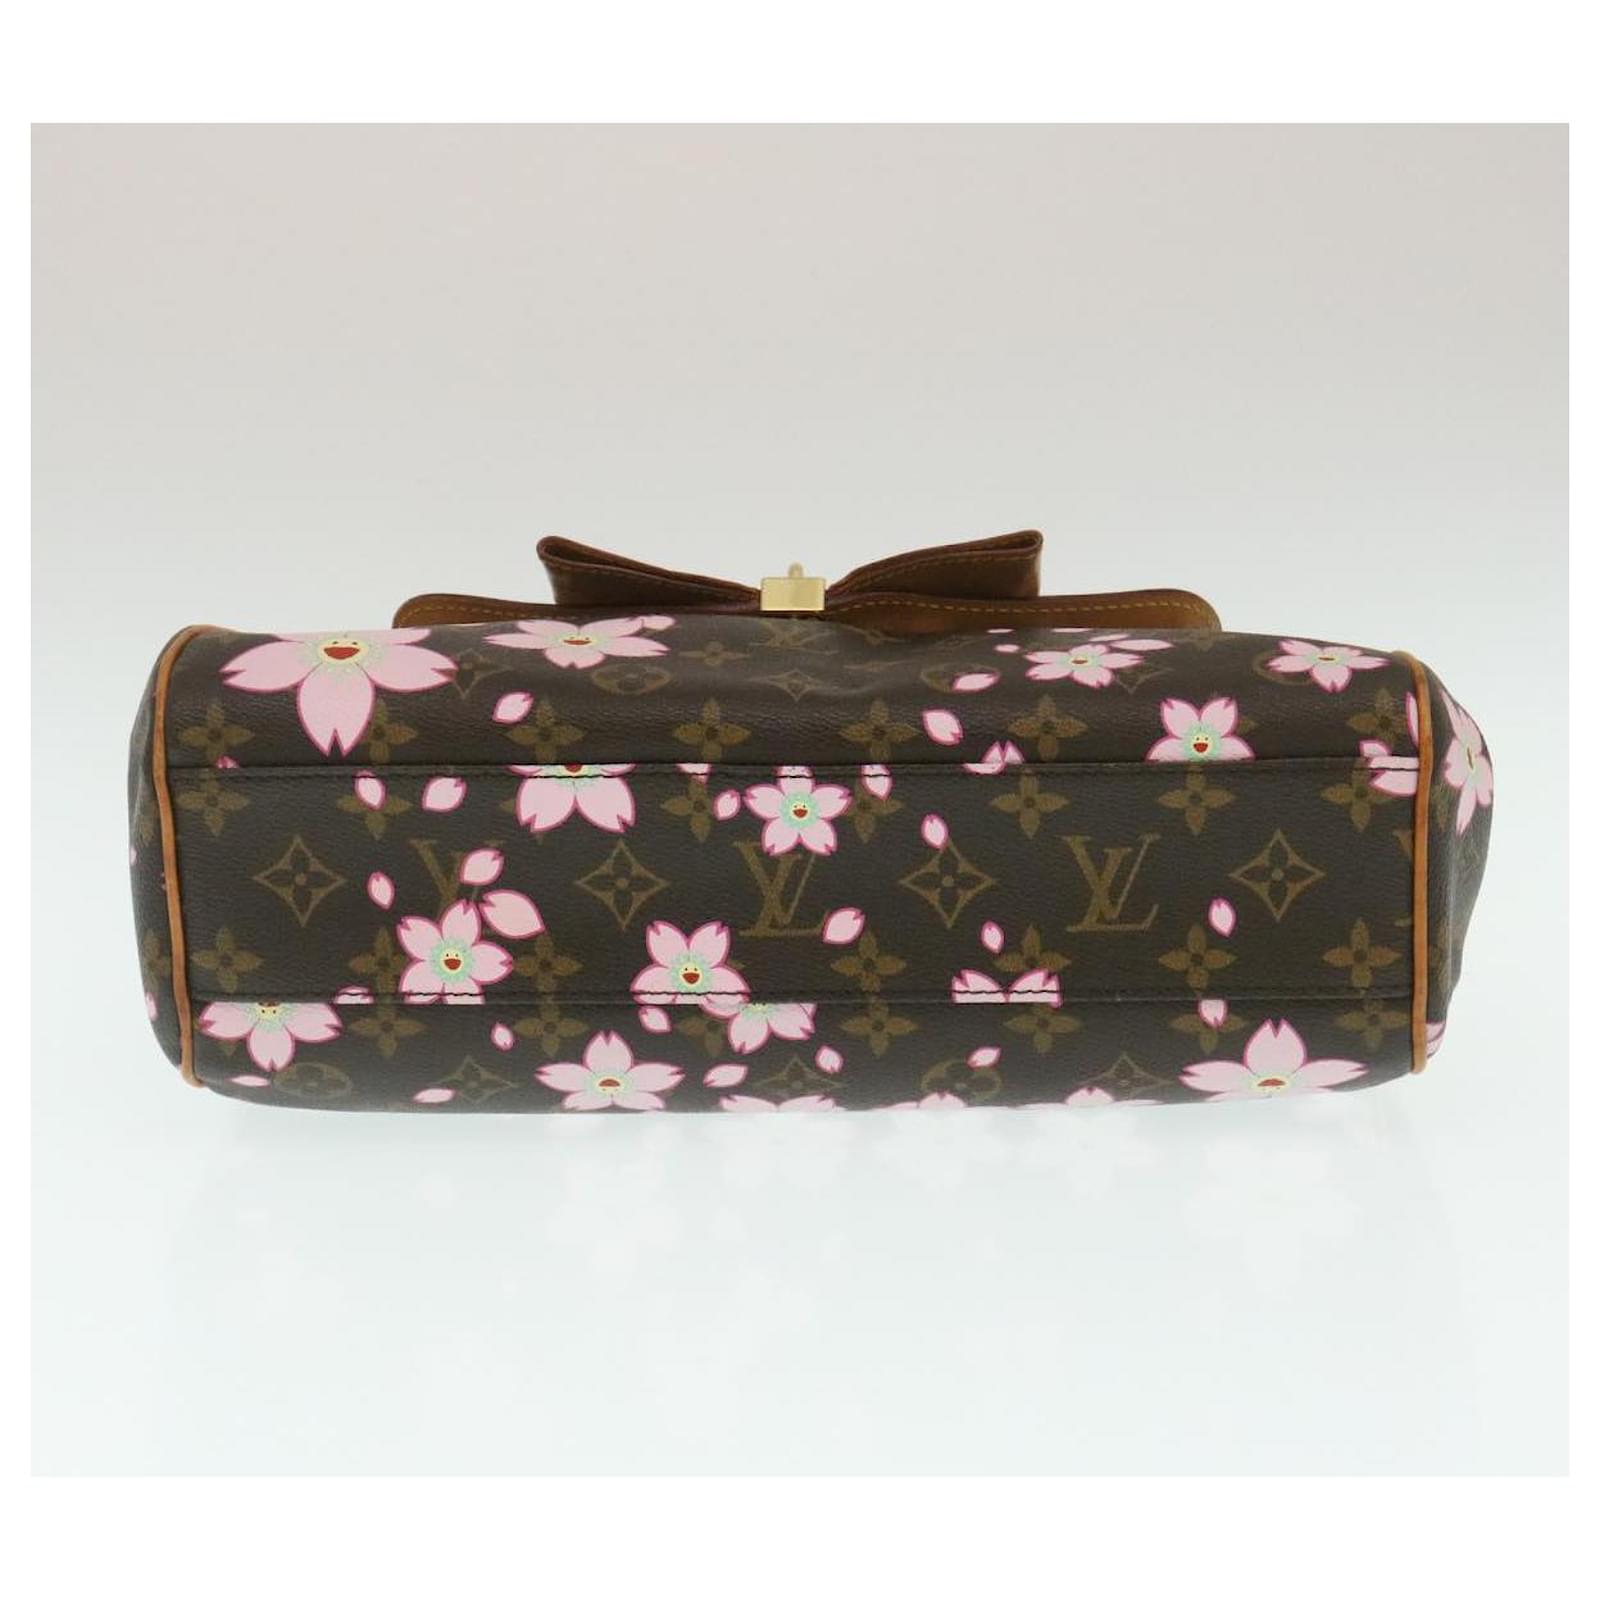 LOUIS VUITTON Monogram Cherry Blossom Sac Retro PM Hand Bag M92014